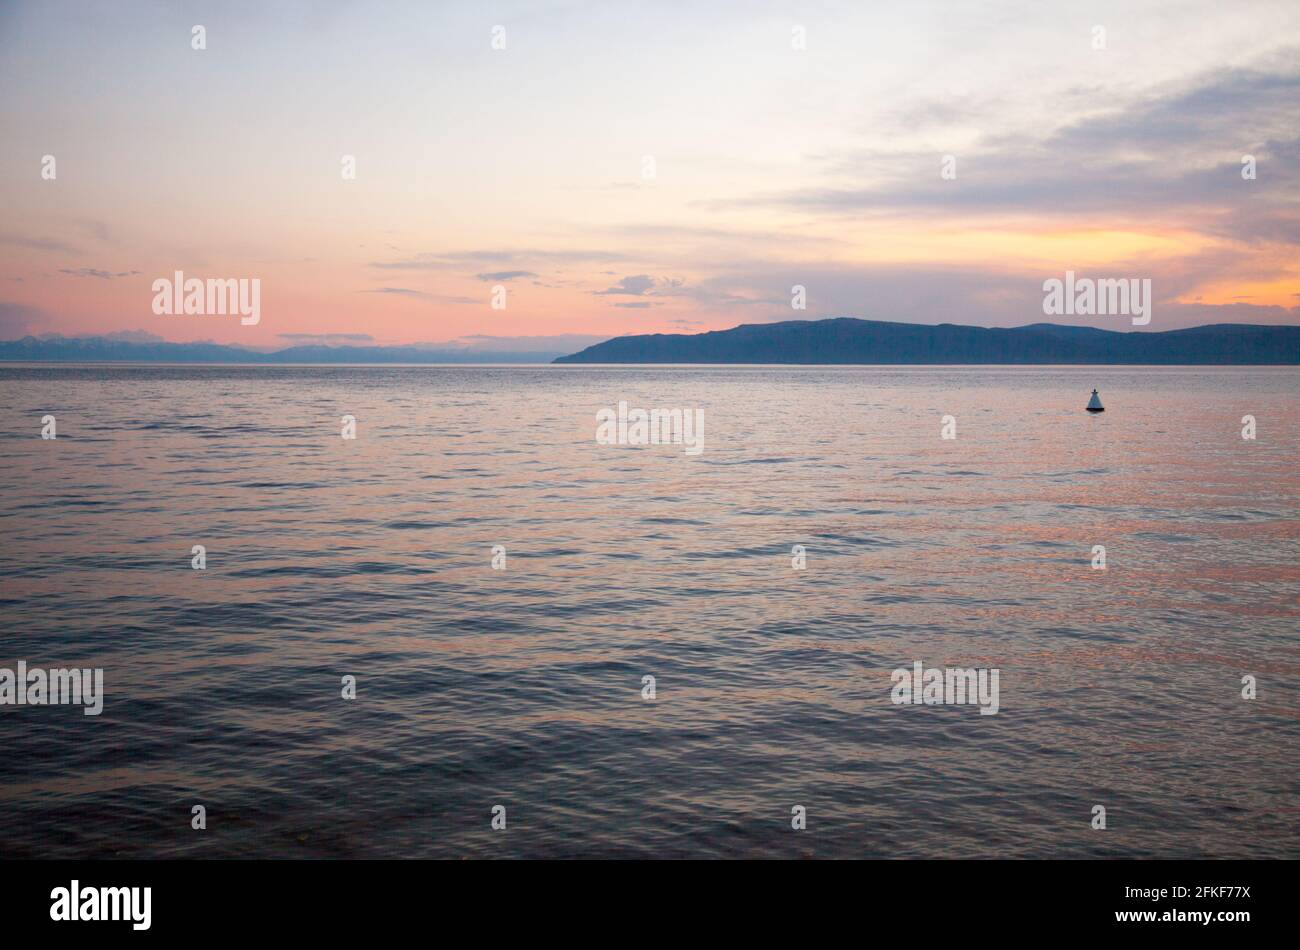 Sonnenuntergang auf dem Baikalsee, Sibirien. Russland. Stockfoto